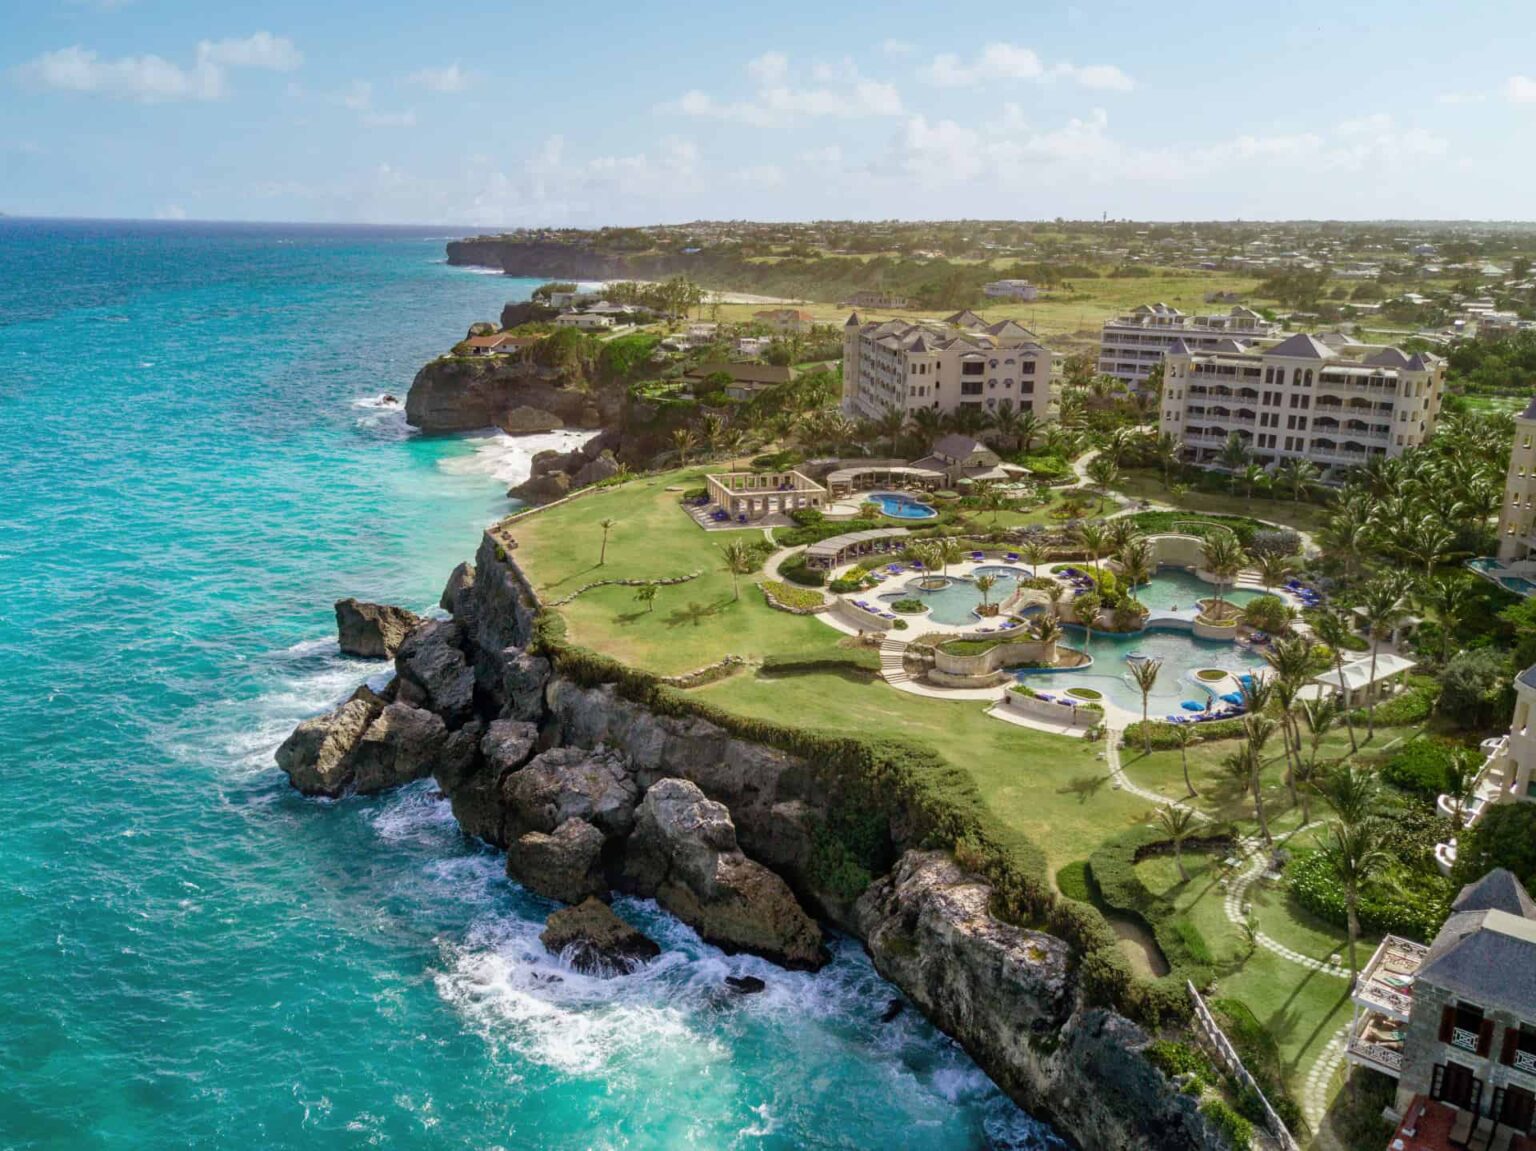 The Crane Resort, a cliffside ocean view resort in St. Philip, Barbados.